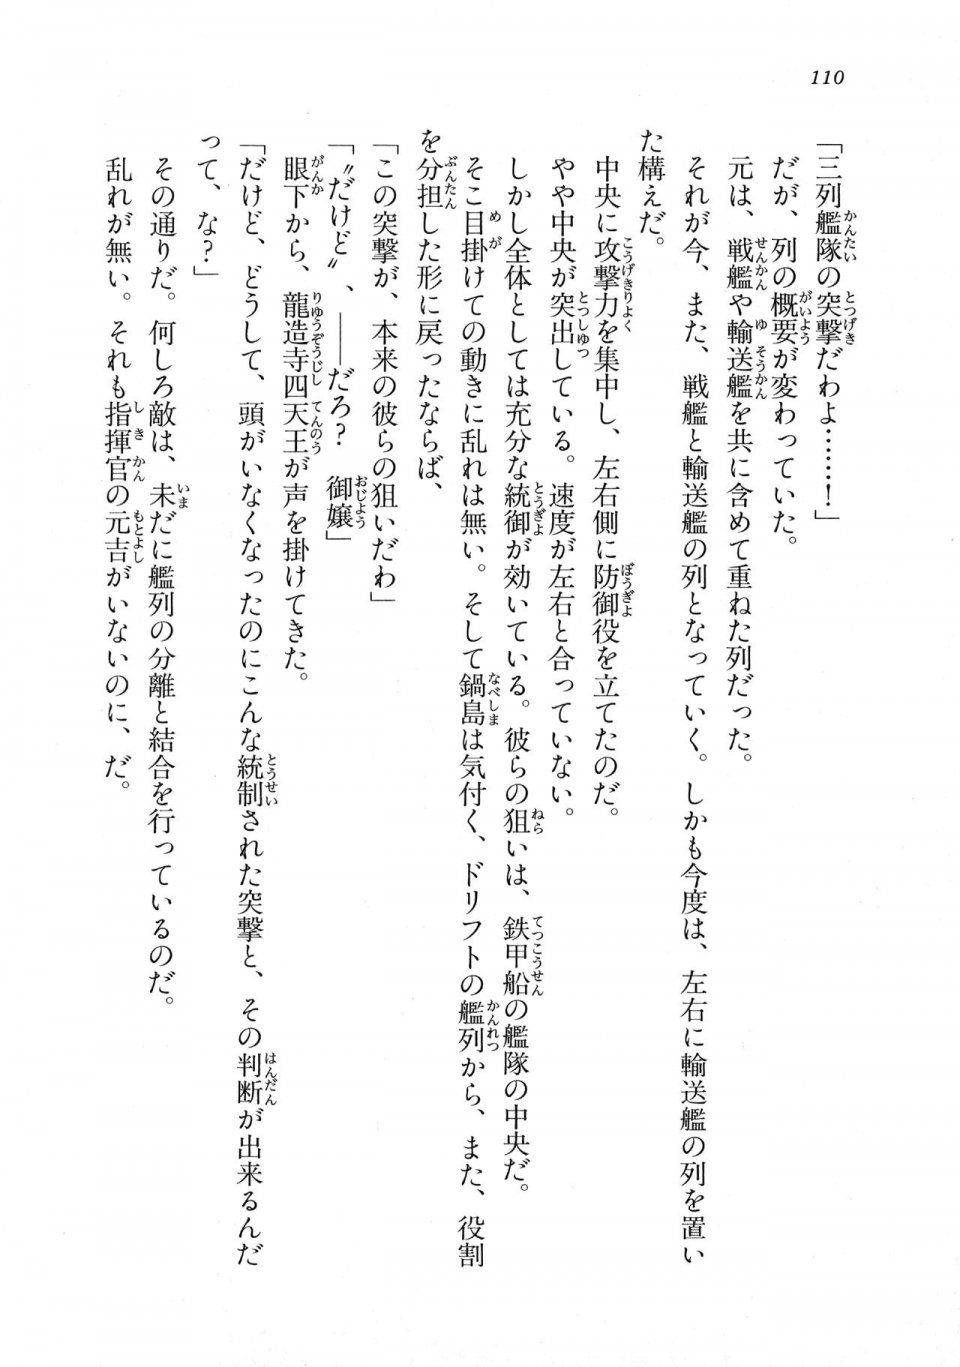 Kyoukai Senjou no Horizon LN Vol 18(7C) Part 1 - Photo #110